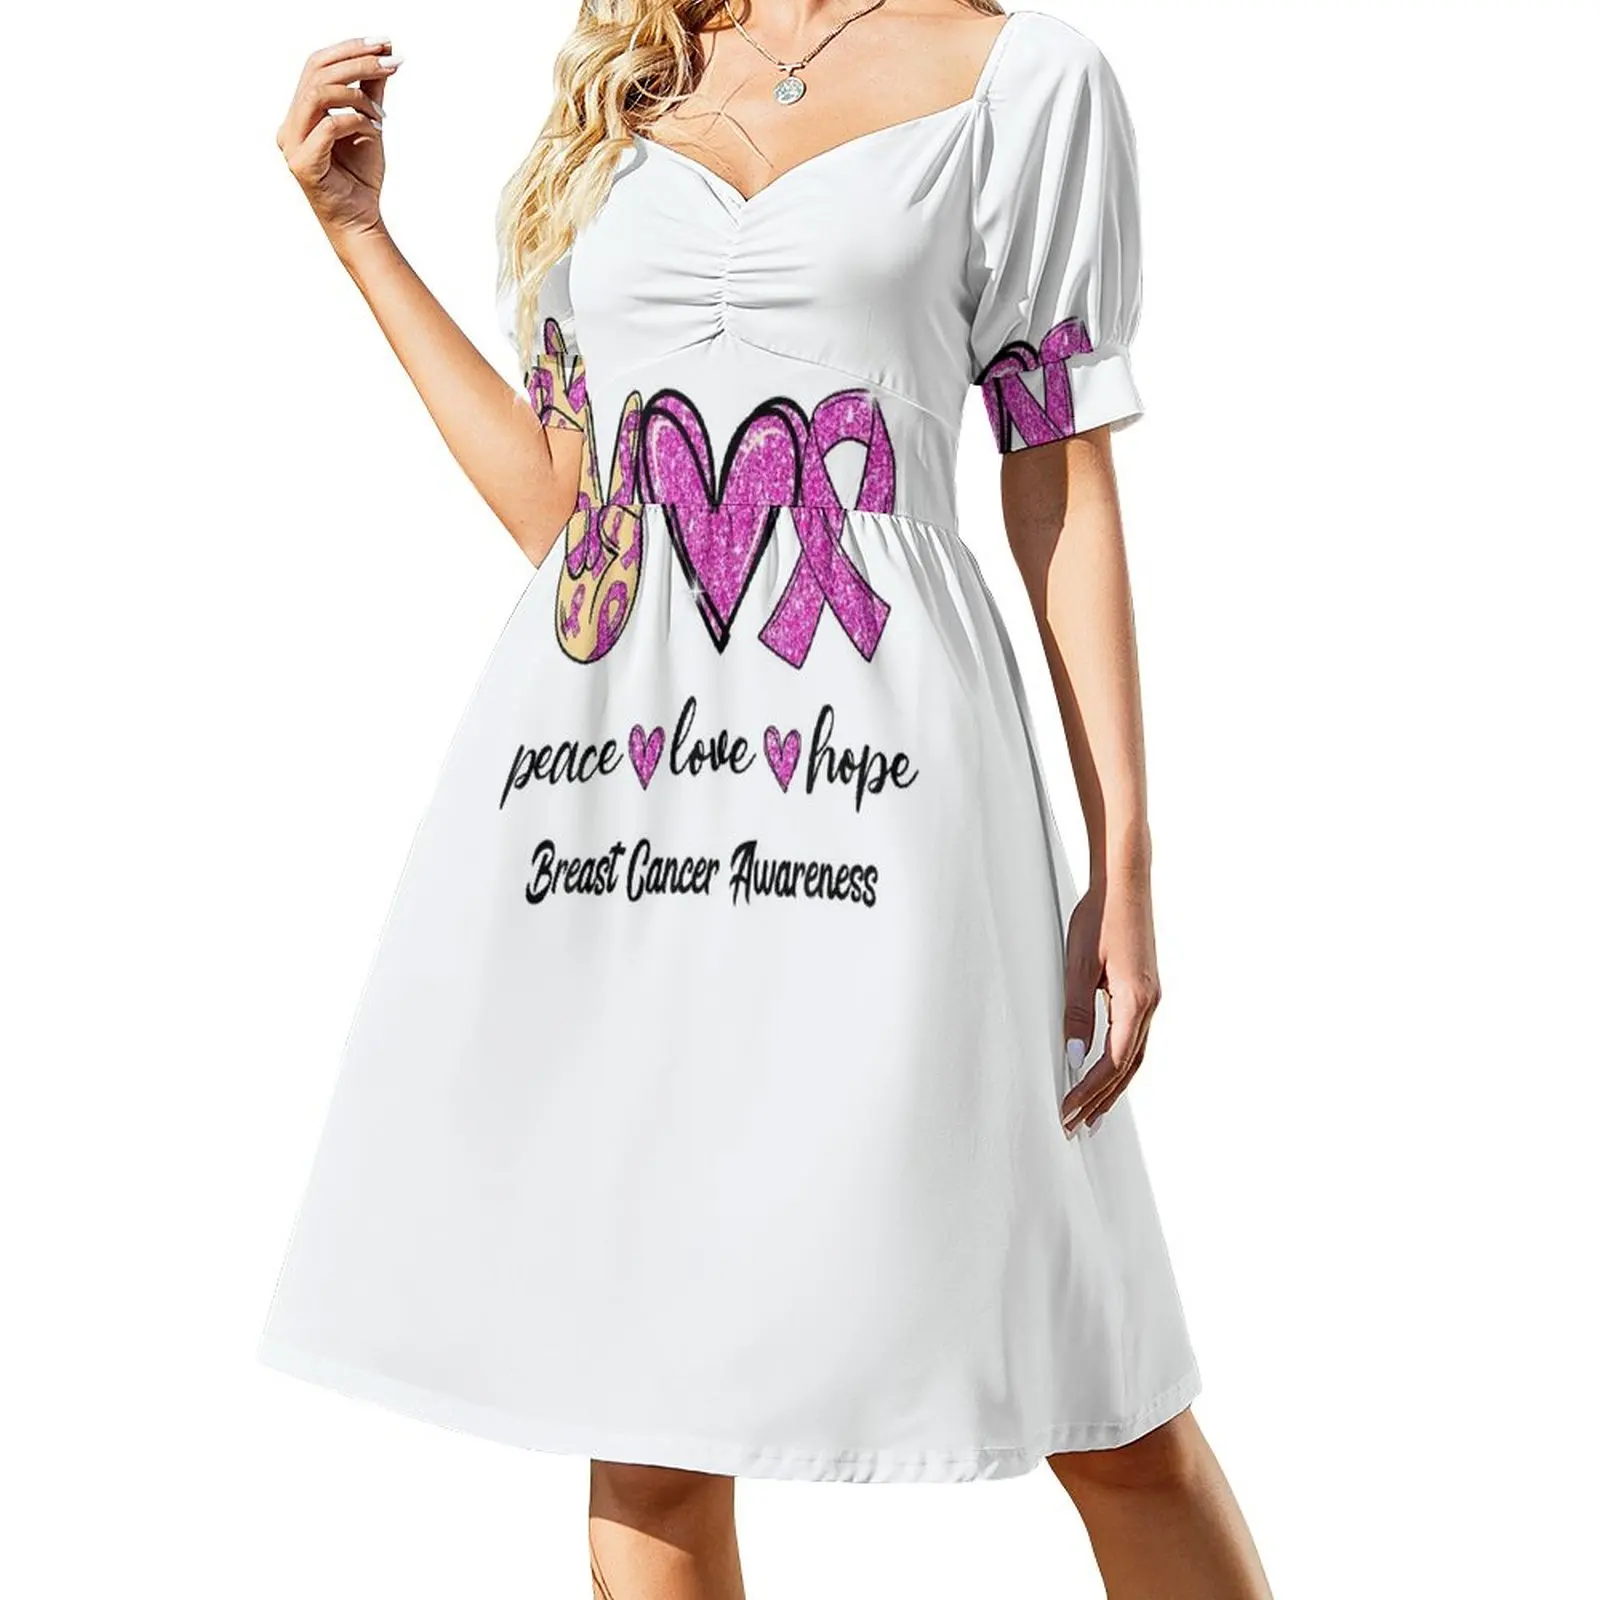 

Peace - Love - Hope - Breast Cancer Awareness Sleeveless Dress summer clothes